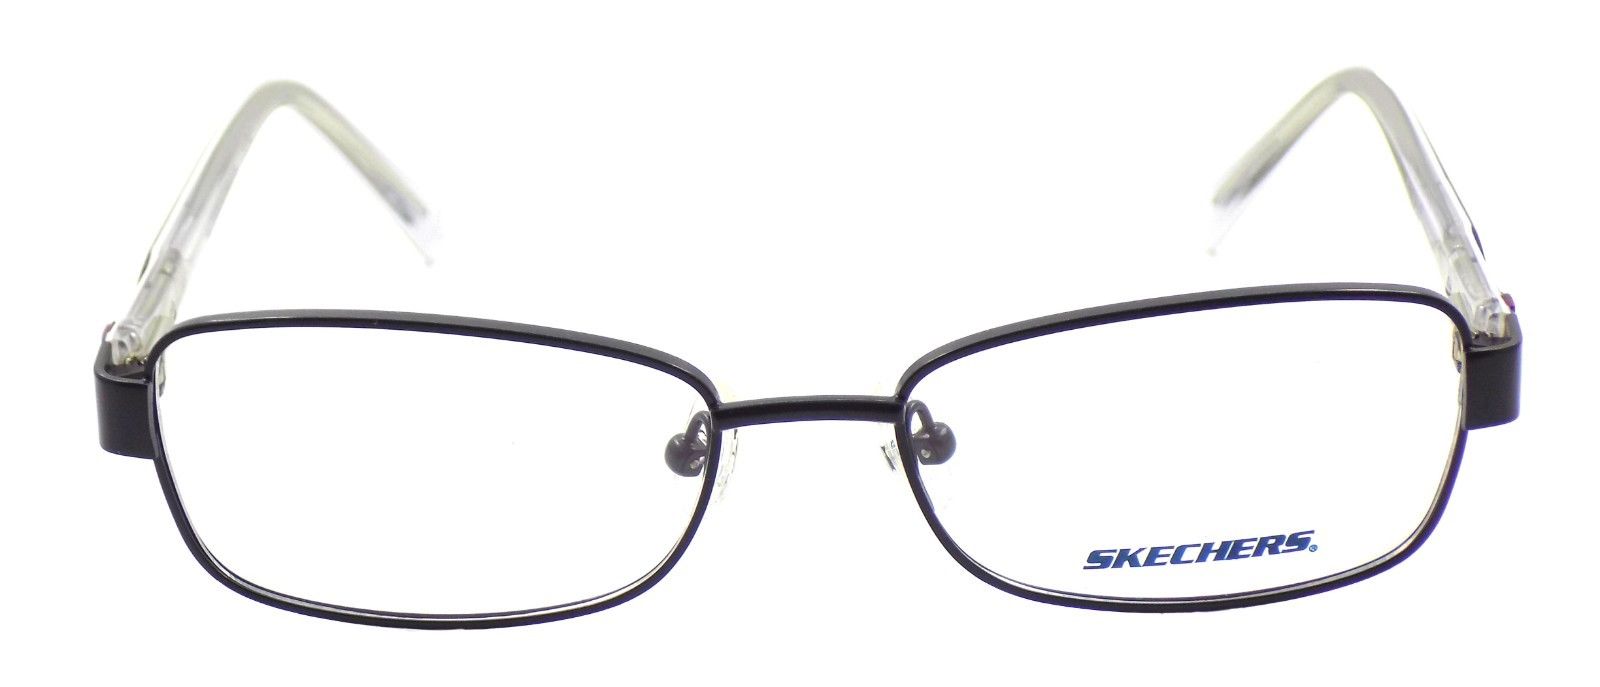 2-SKECHERS SE2116 002 Women's Eyeglasses Frames 50-16-135 Satin Black + CASE-664689776382-IKSpecs